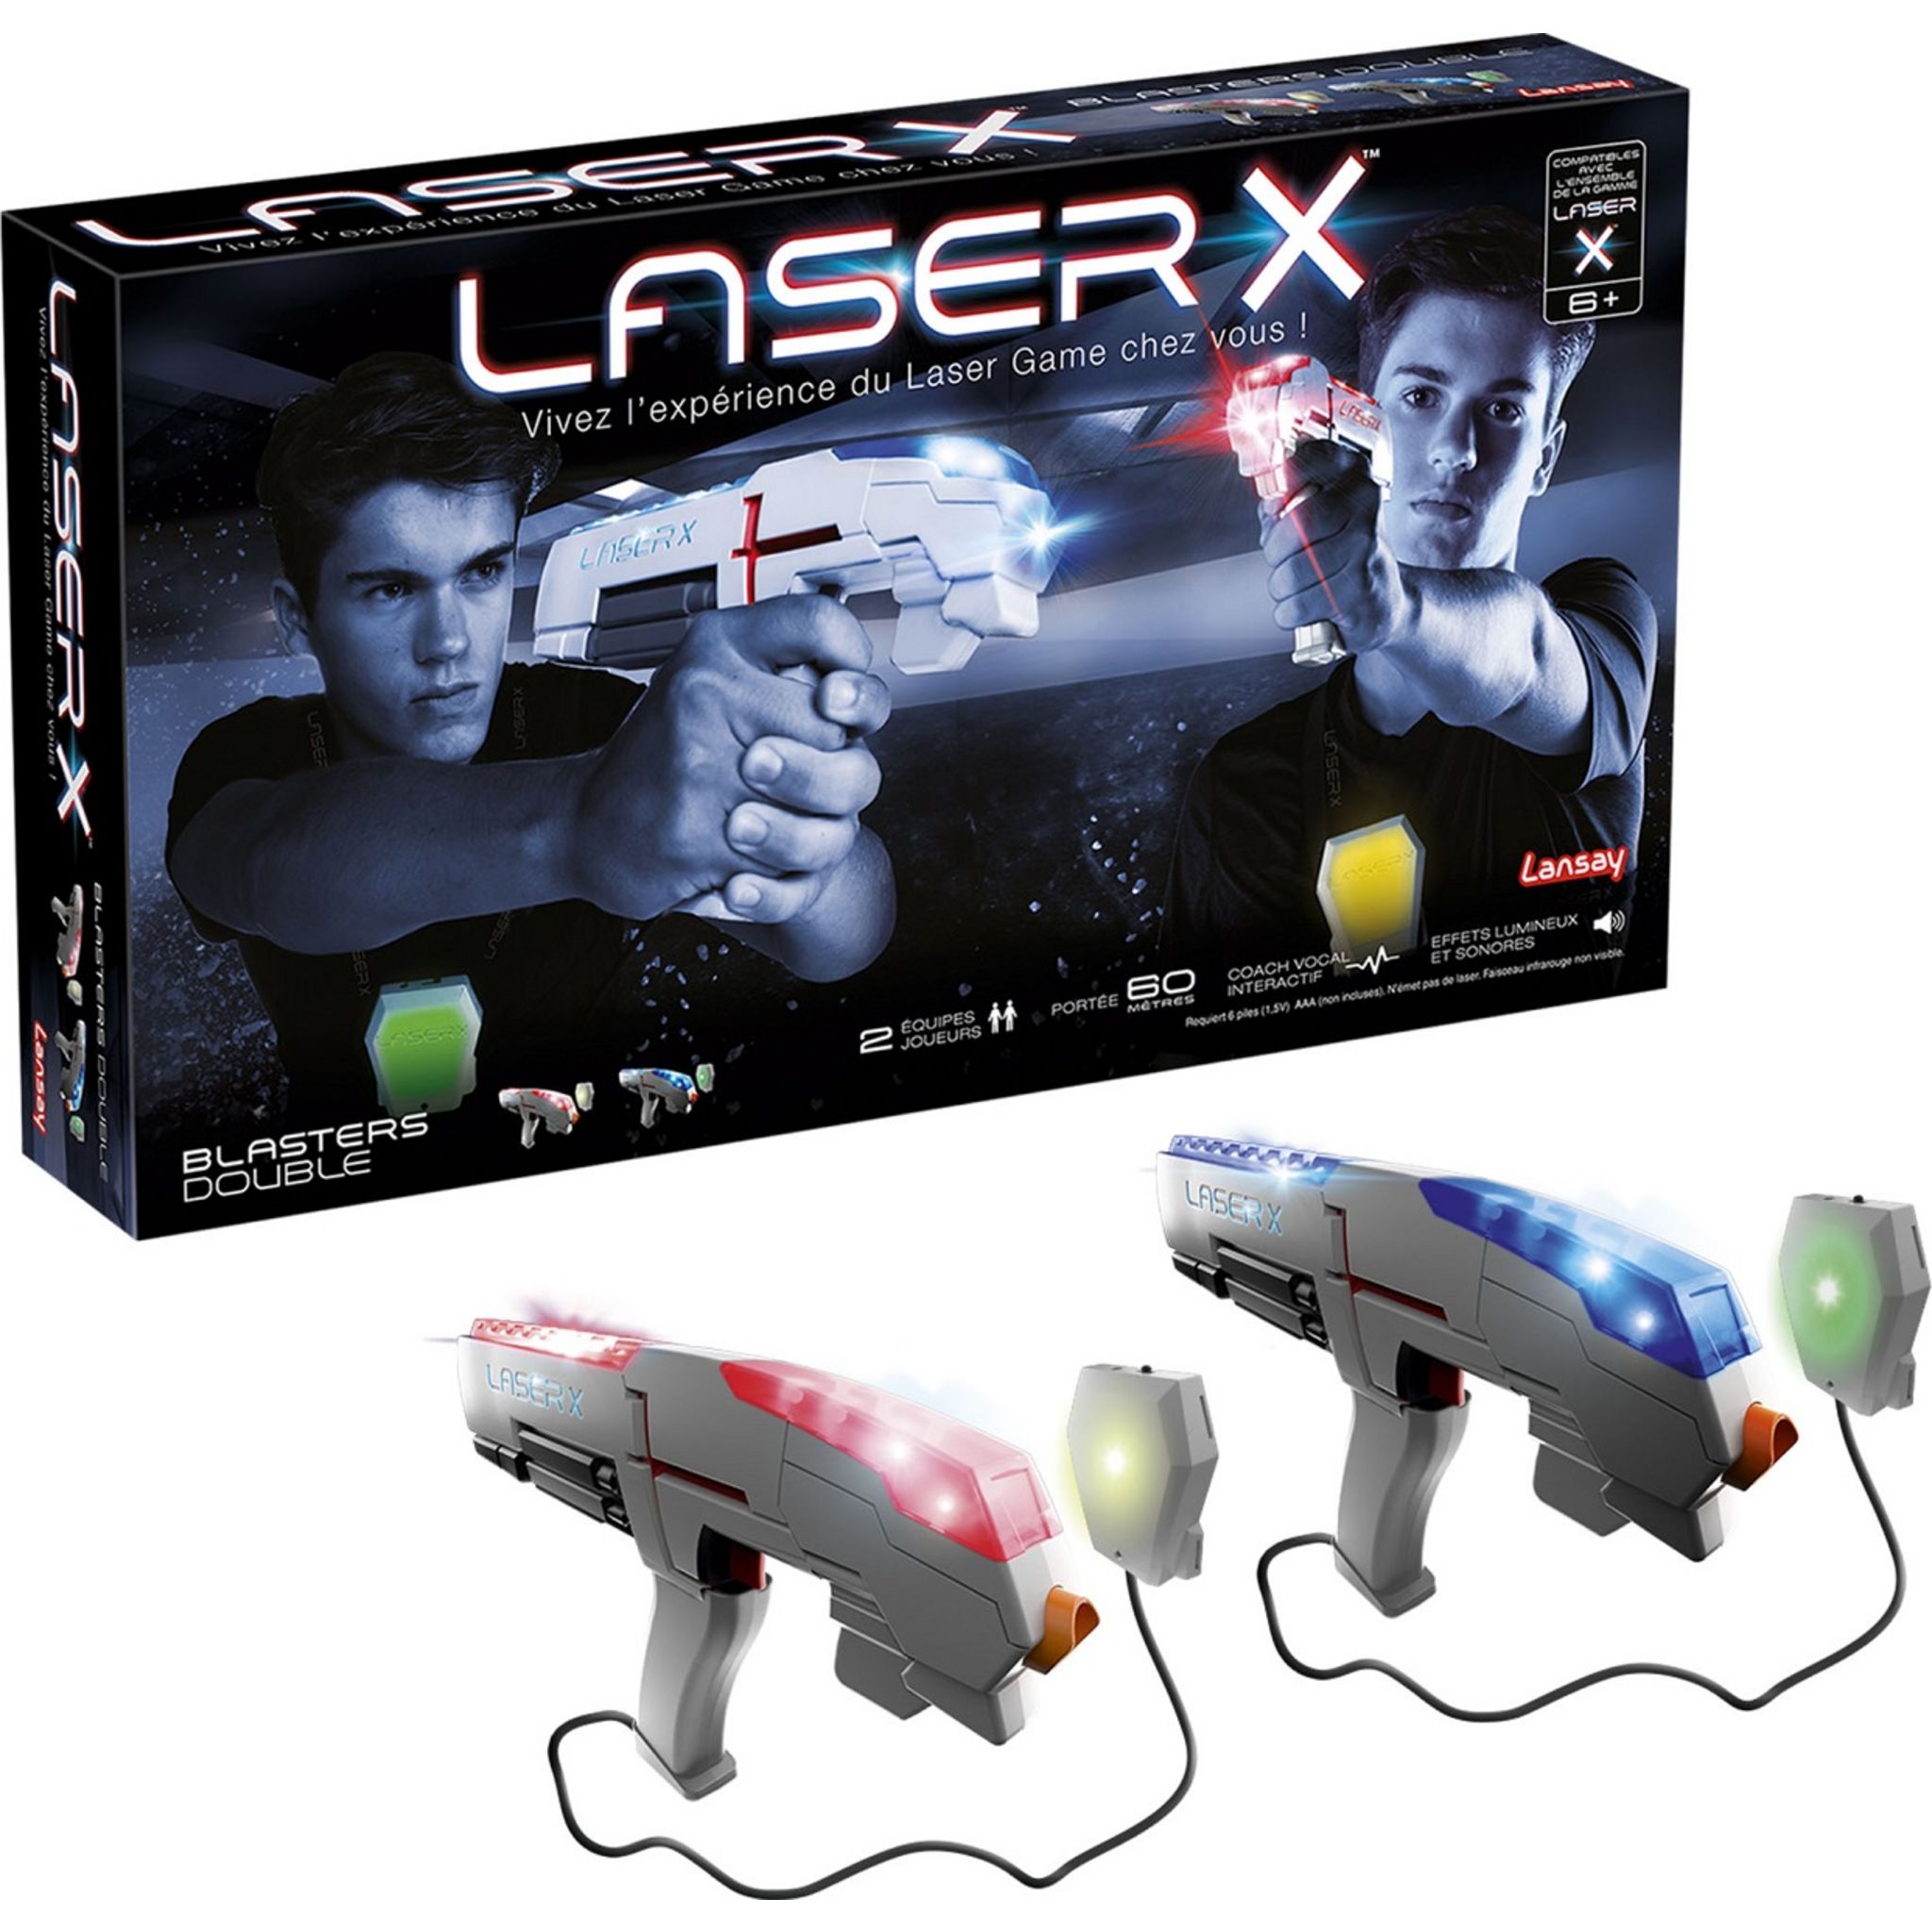 Location de pistolets laser game avec bases lumineuses